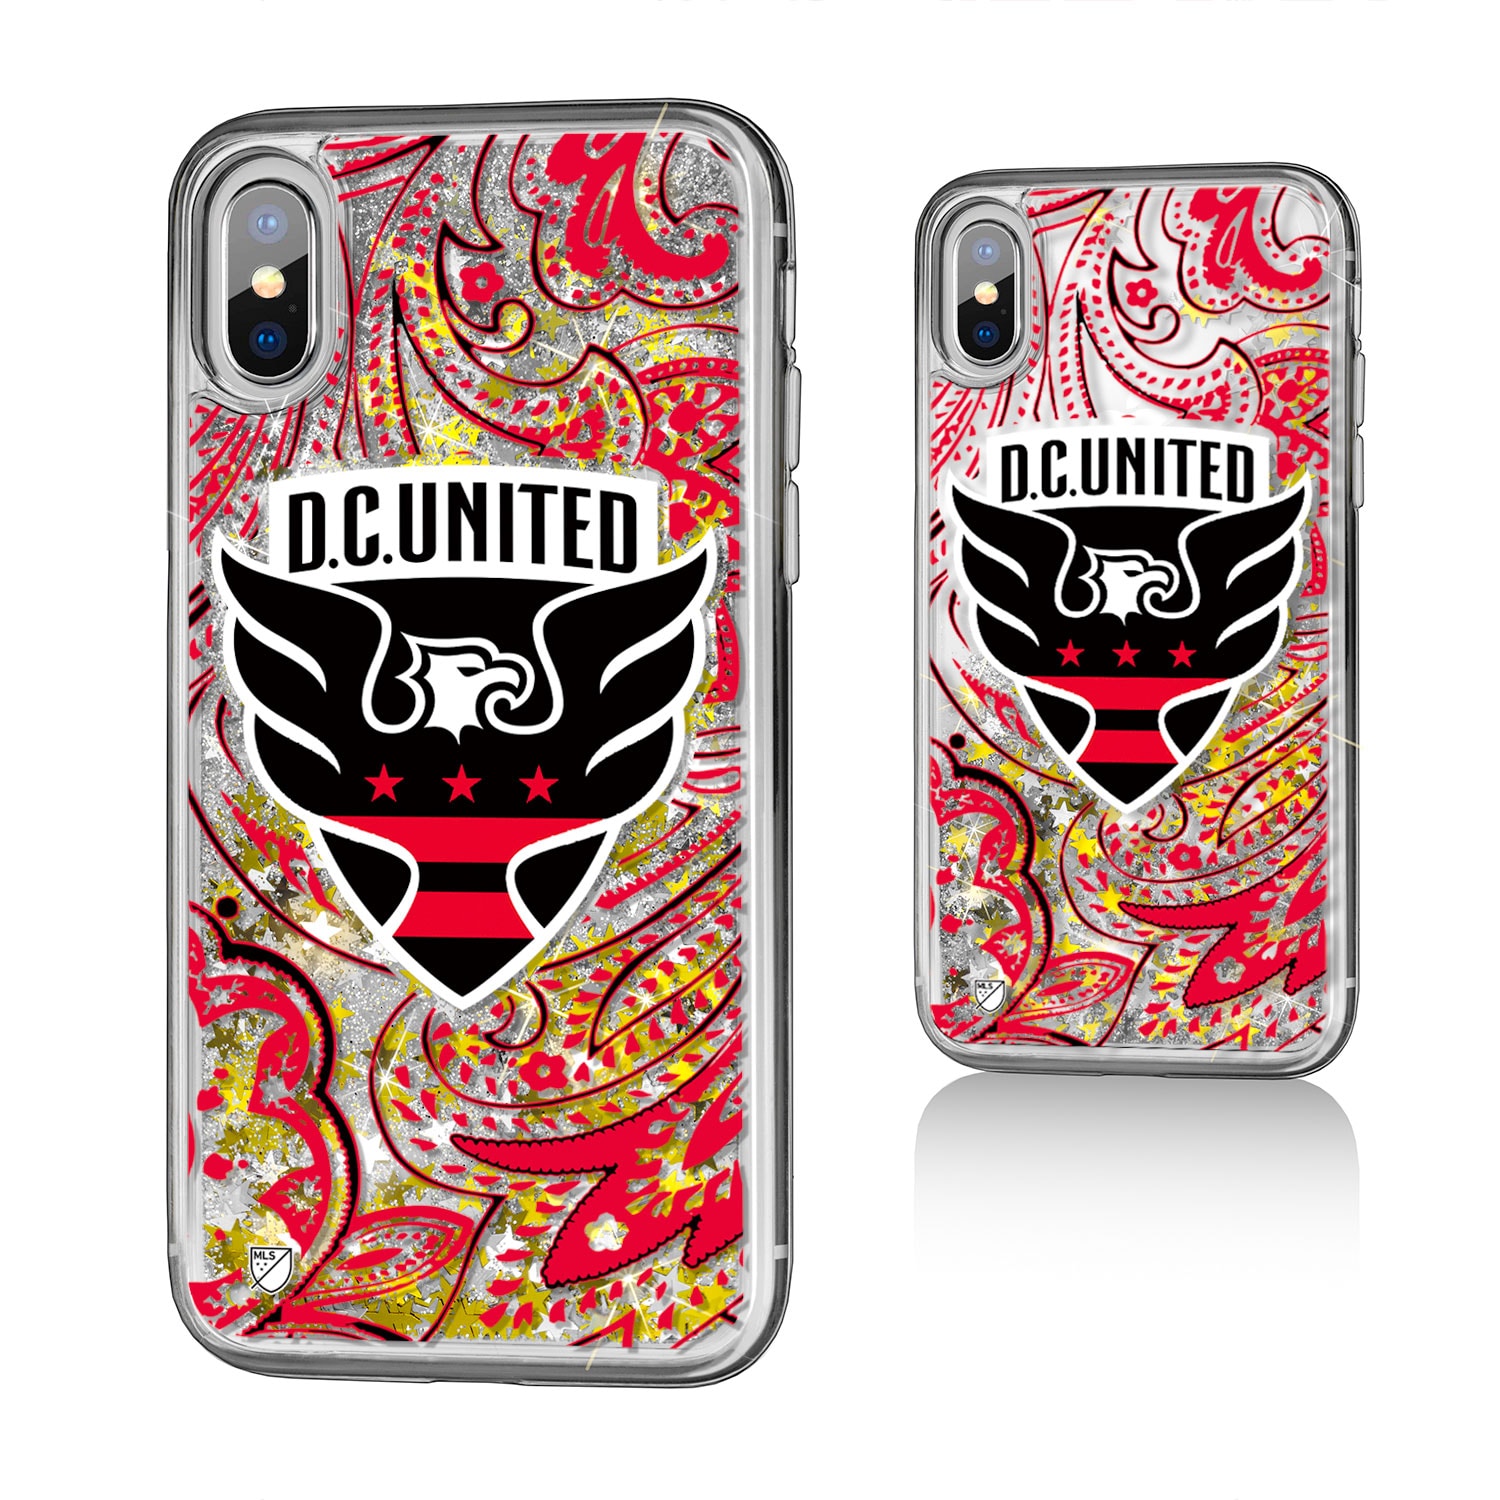 D.C. United Pattern Glitter iPhone X/XS Case - image 1 of 1